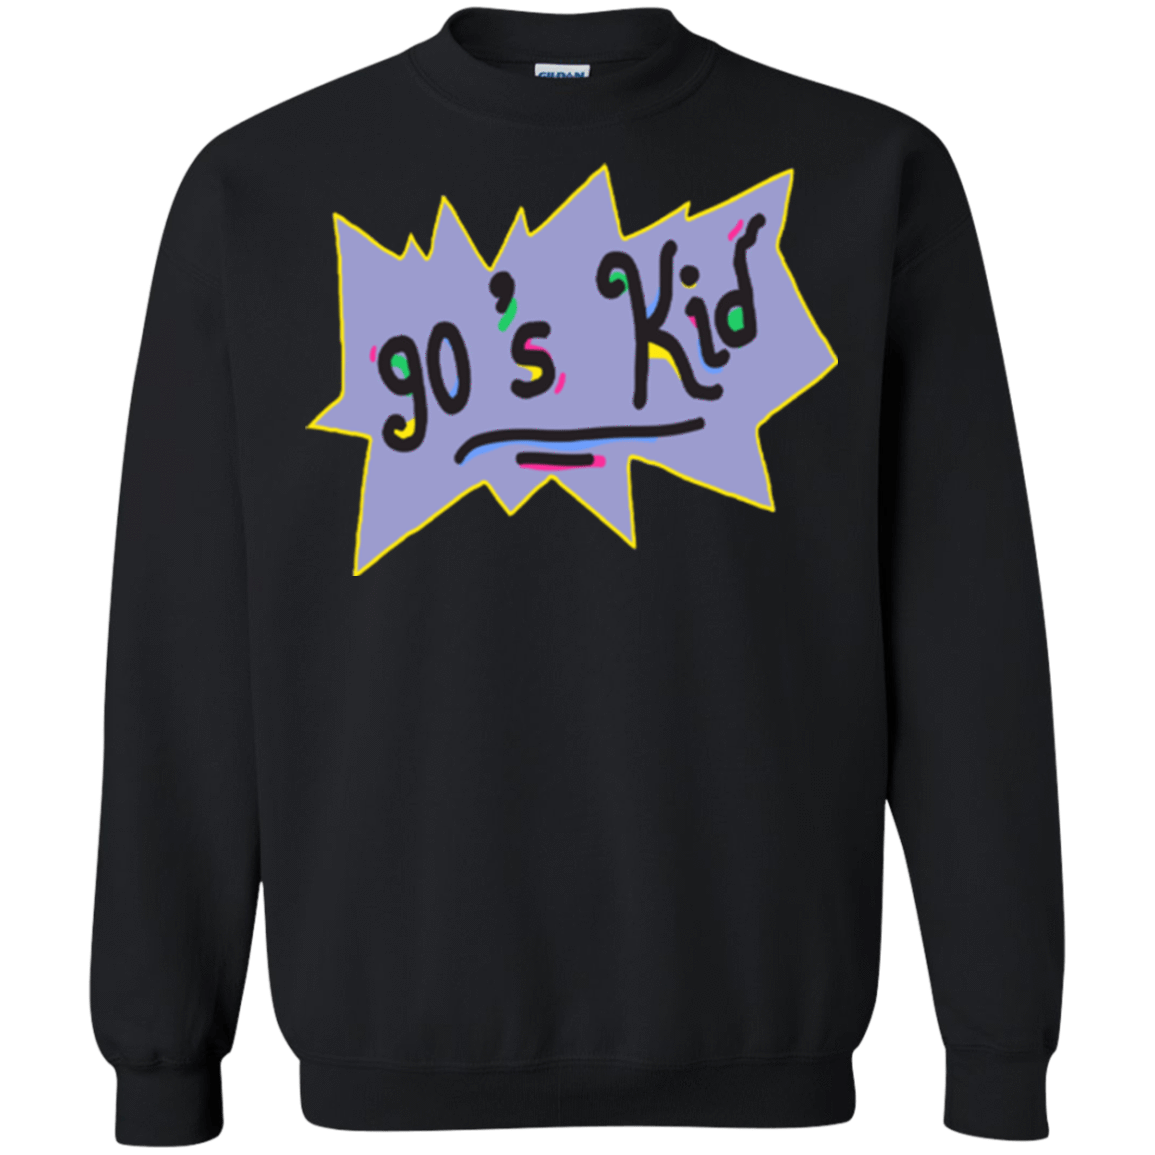 Sweatshirts Black / Small 90's Kid Crewneck Sweatshirt